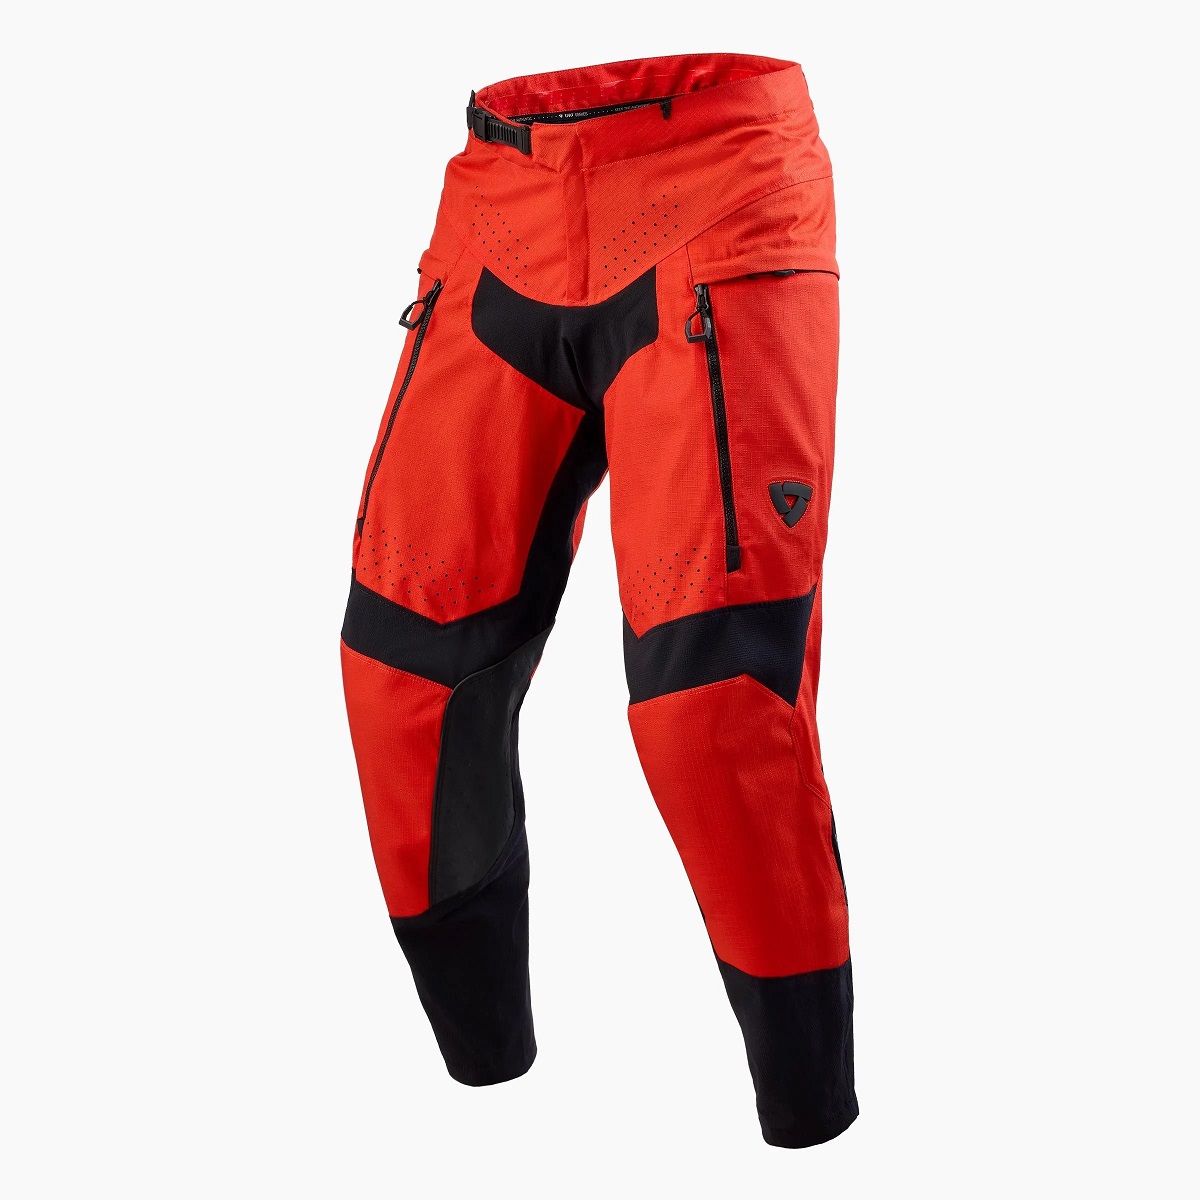 Image of REV'IT! Peninsula Trousers Red Motorcycle Pants Size L EN